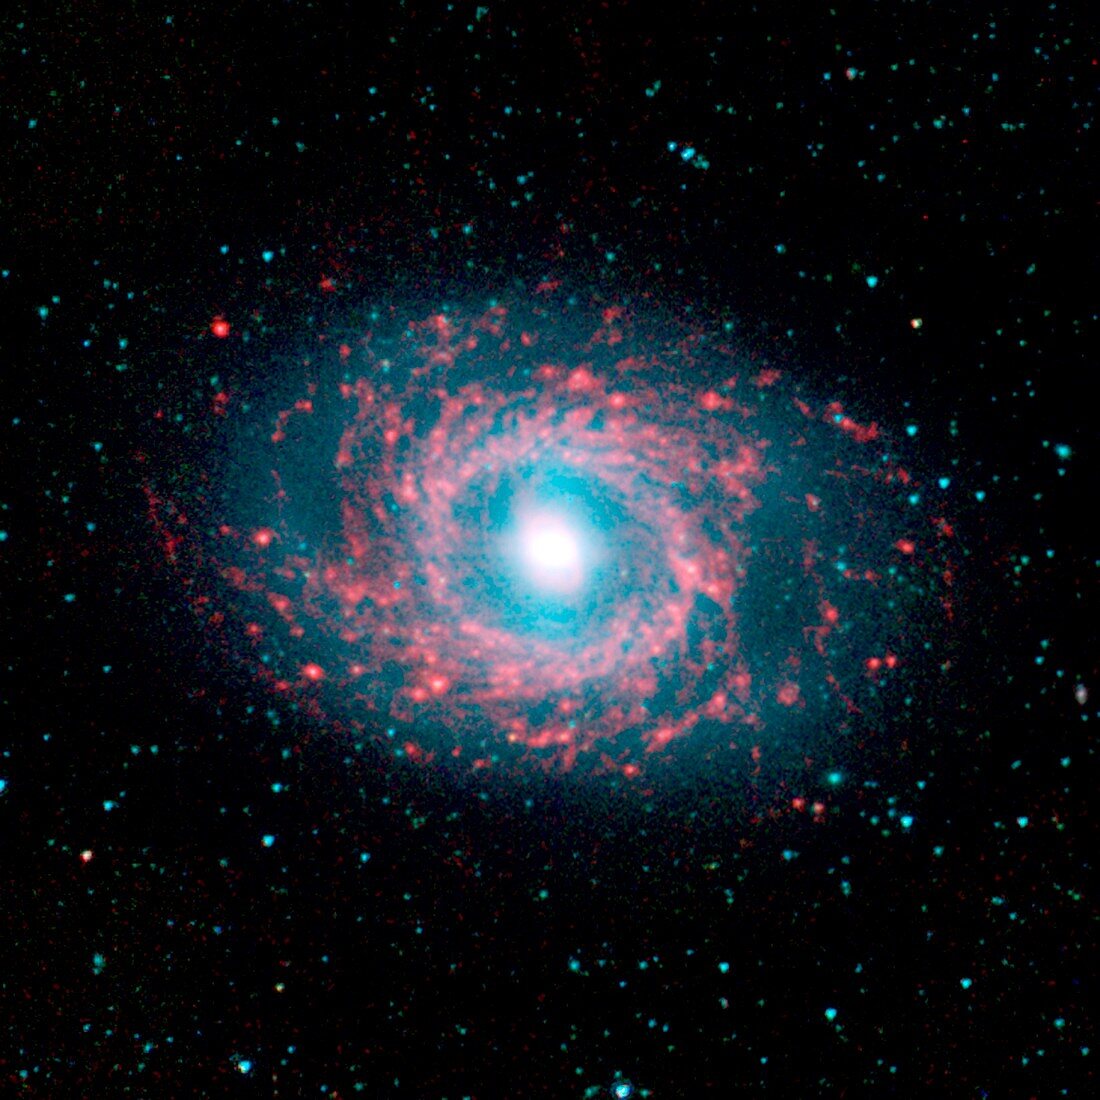 Galaxy NGC 3351,infrared image